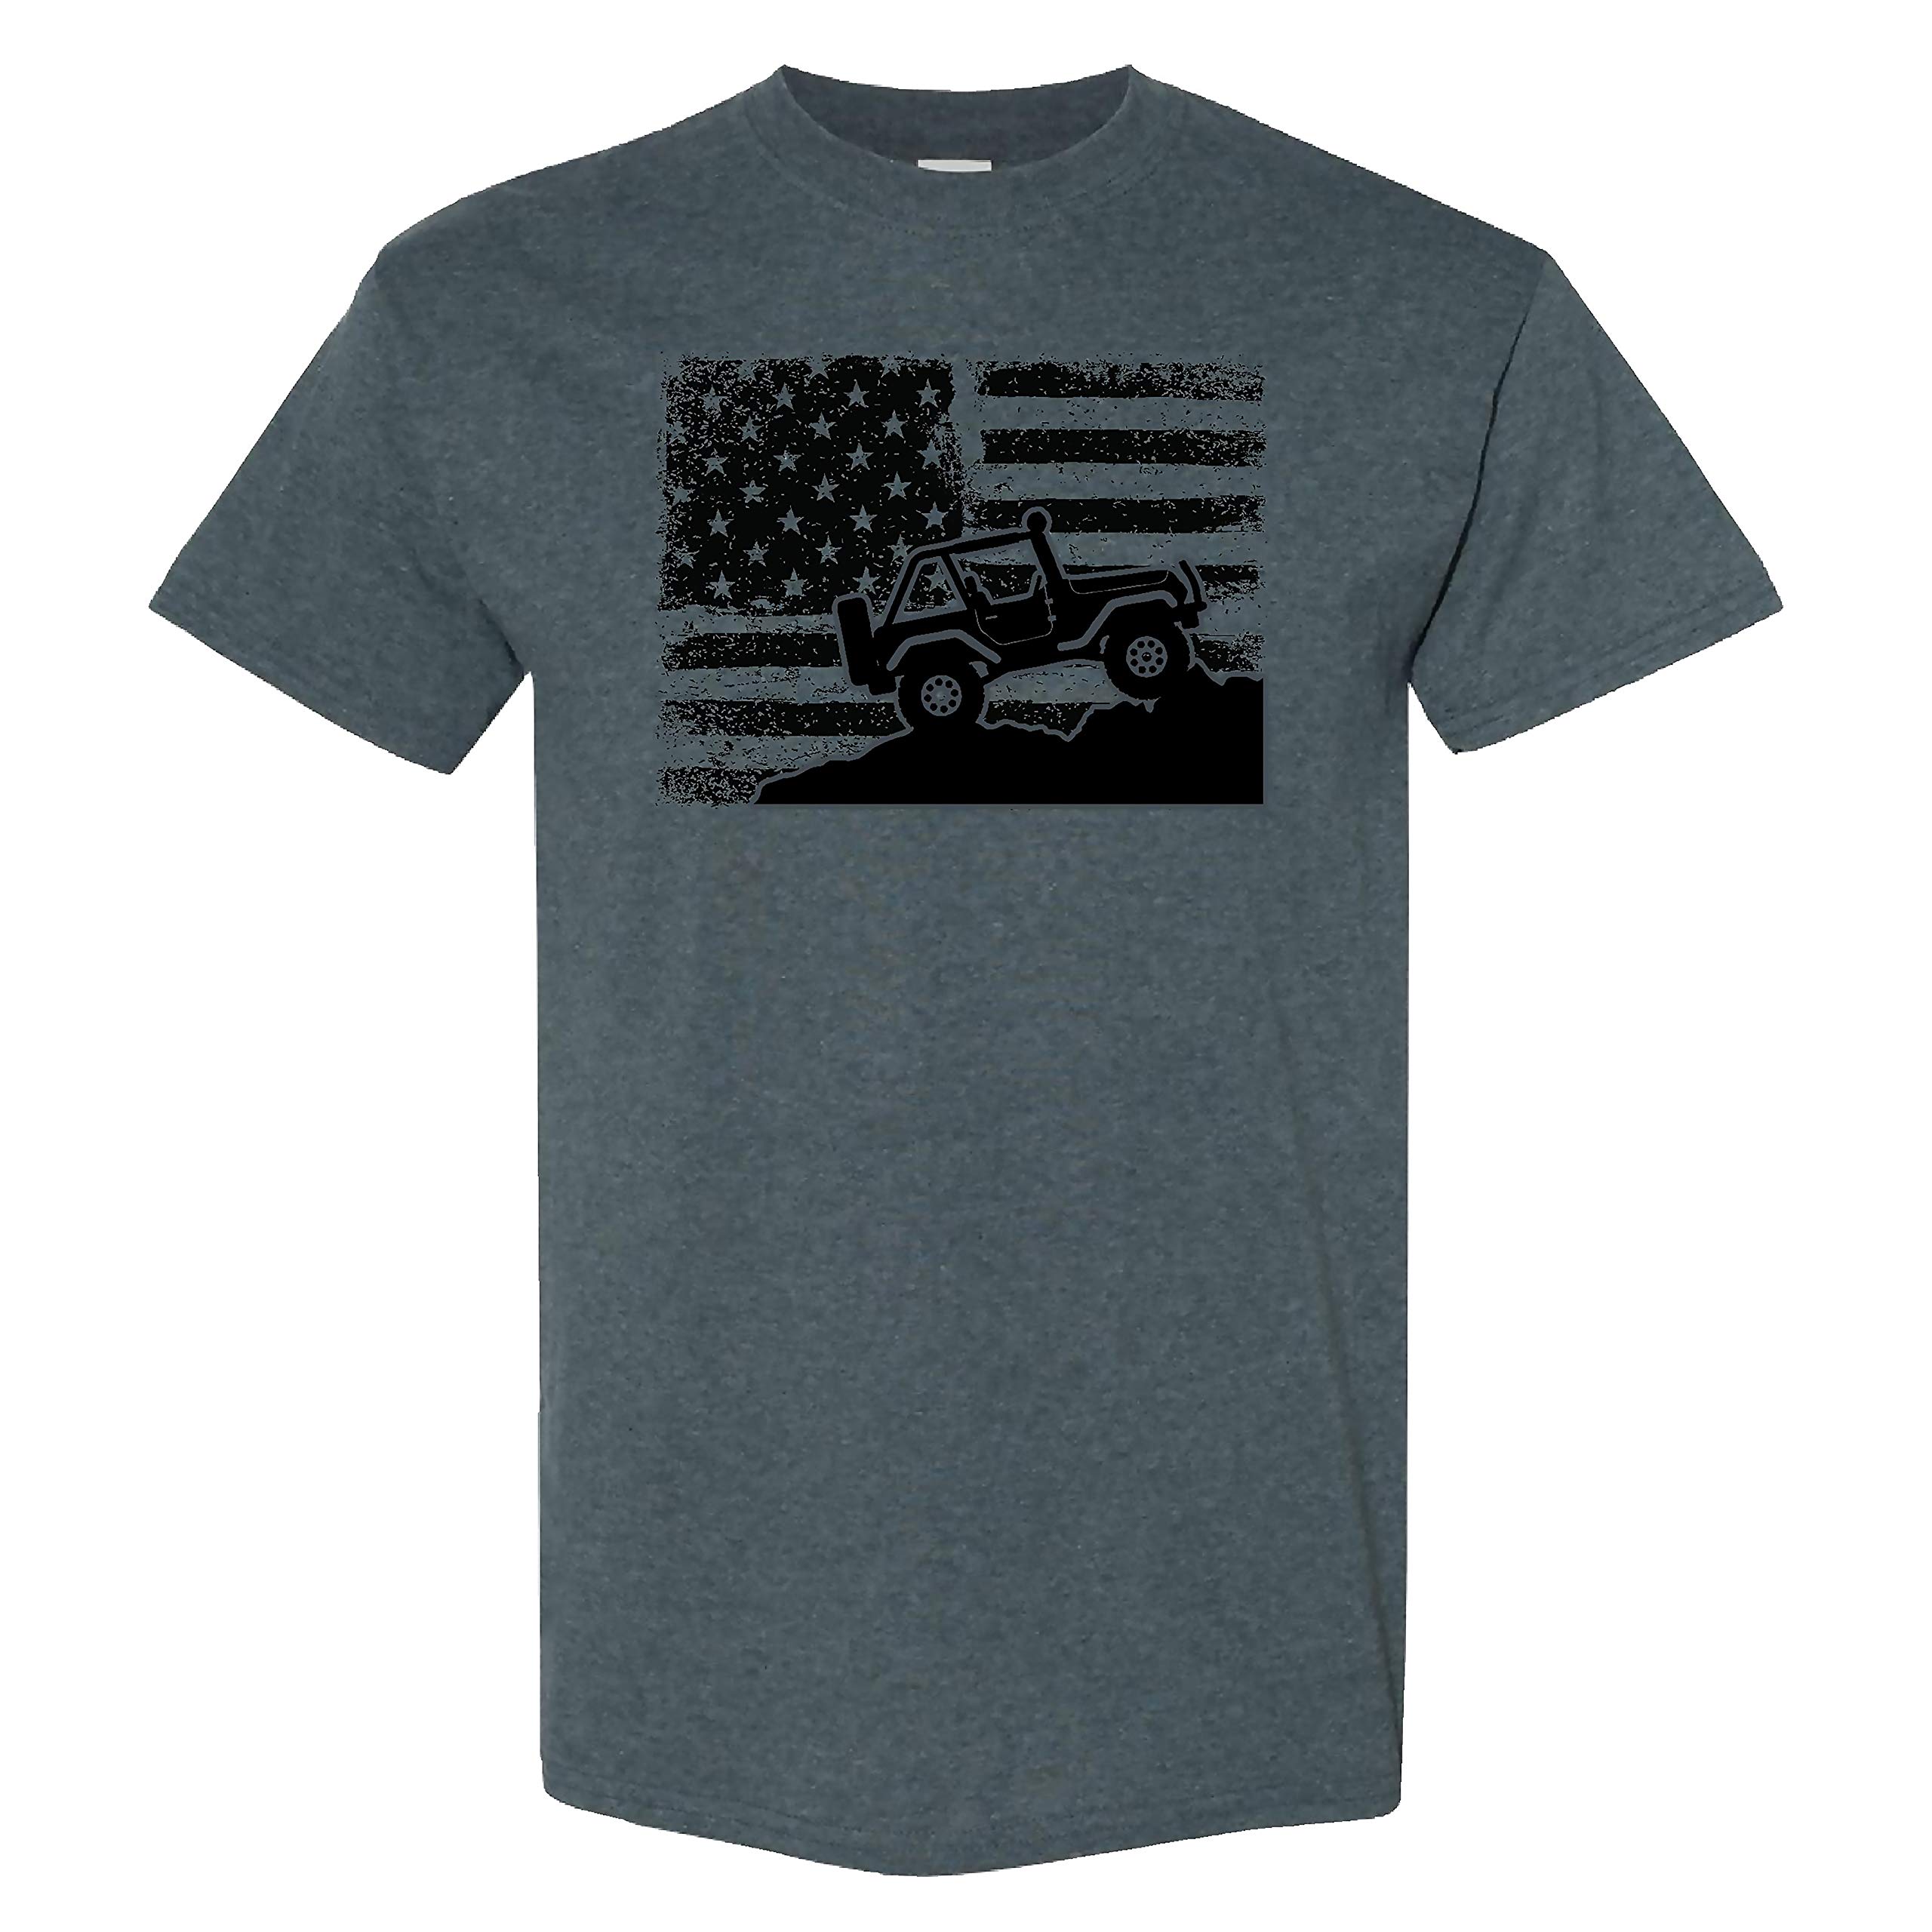 American Off-Road on a Dark Heather T Shirt